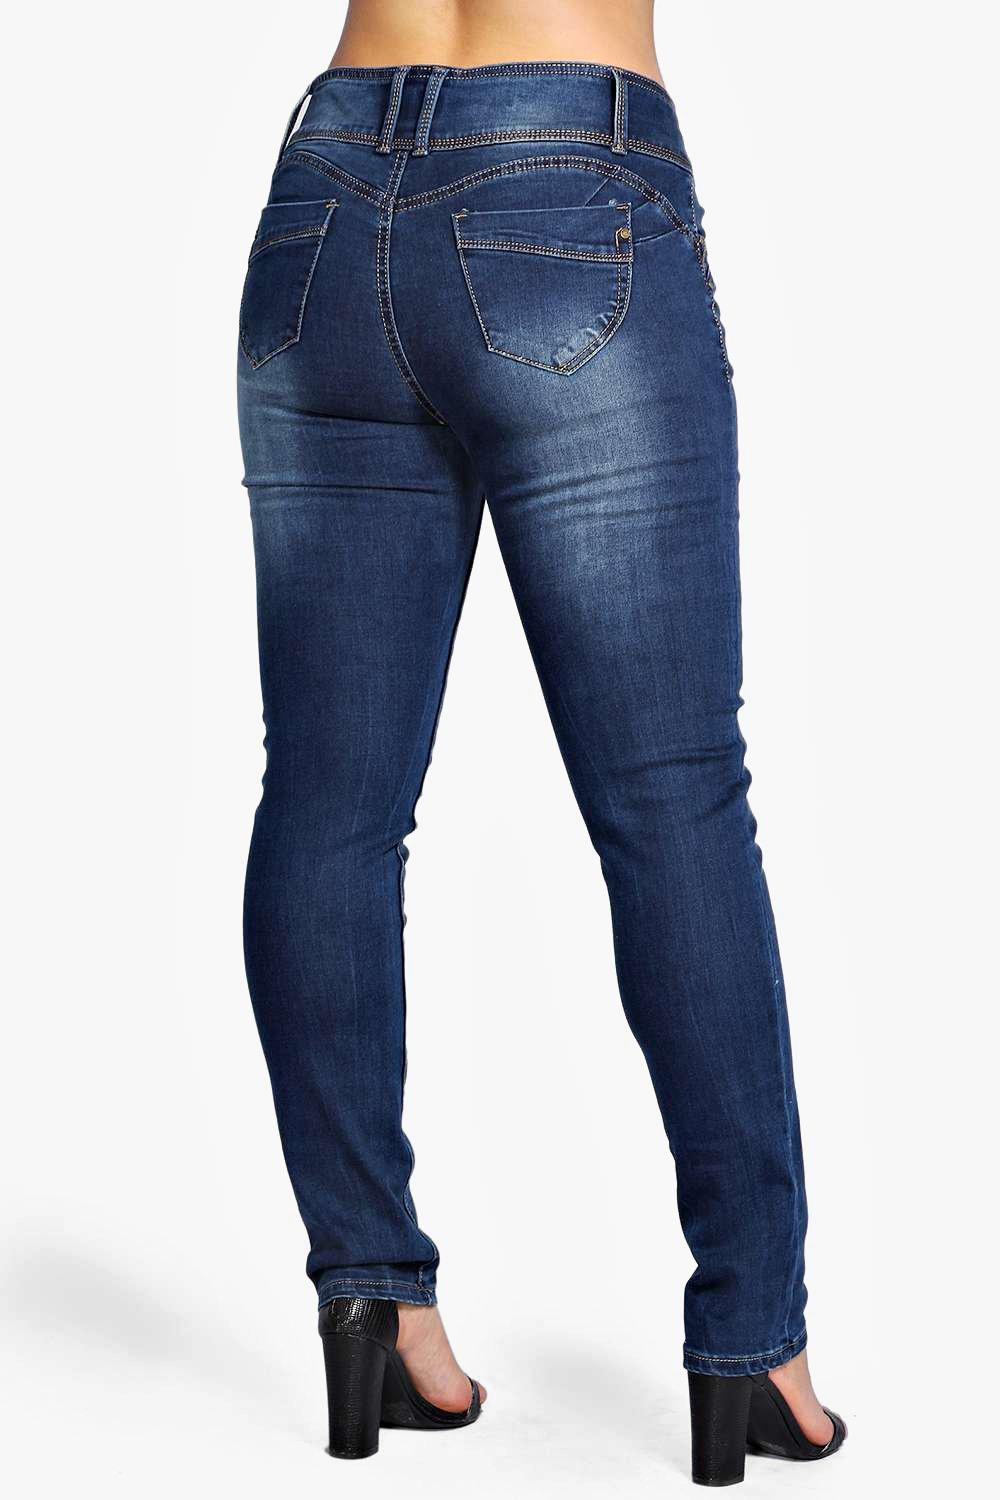 Boohoo Womens Plus Size Miley High Waisted Stretch Skinny Jeans In Denim Blue | eBay